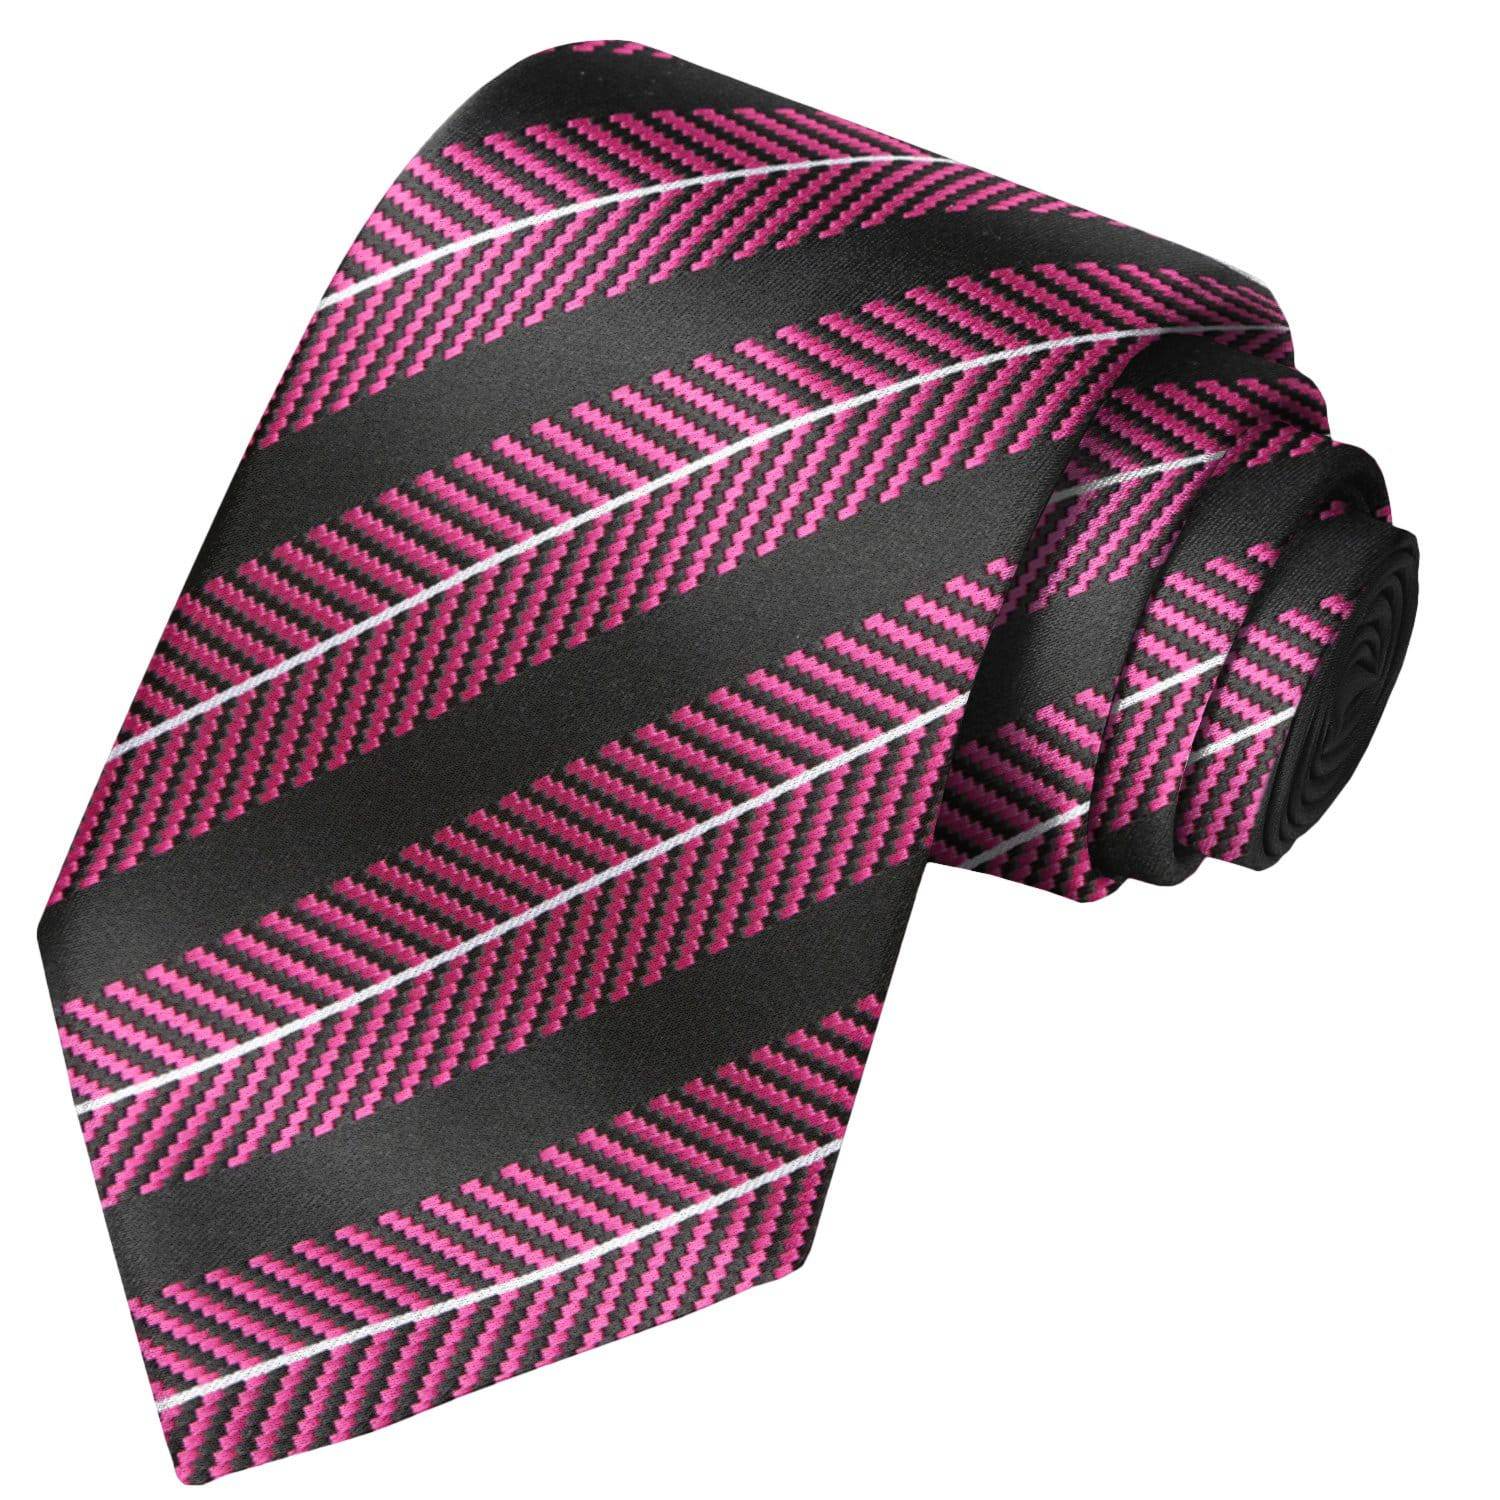 White on Magenta Chevron-Black Striped Tie - Tie, bowtie, pocket square  | Kissties